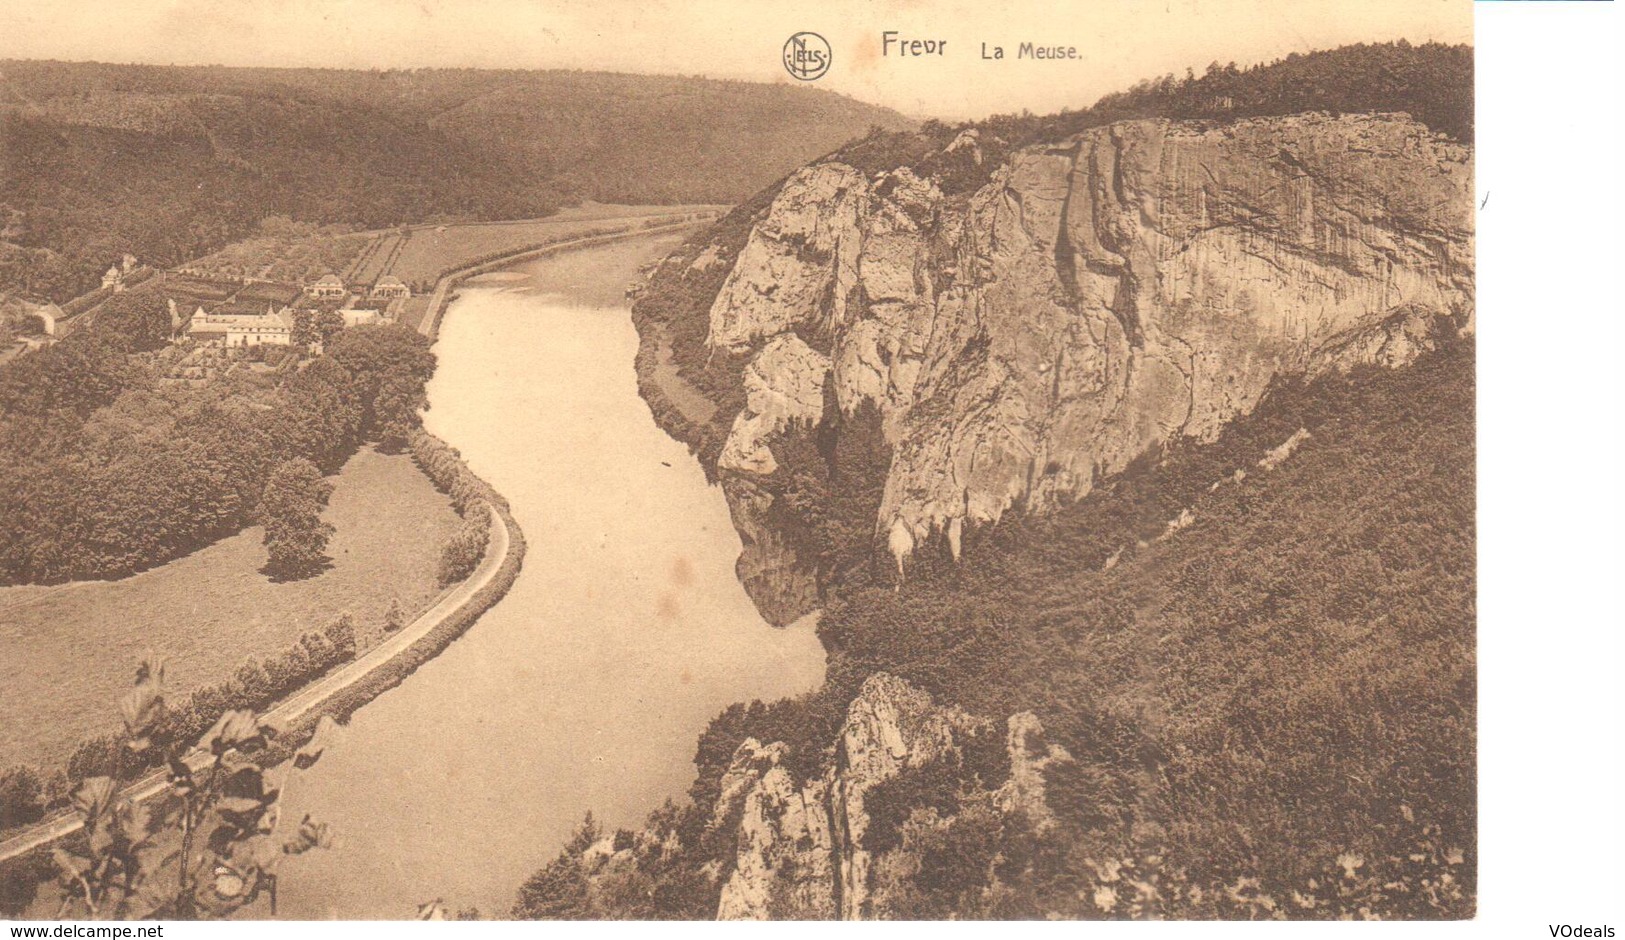 Hastière - CPA - Freyr - La Meuse - Hastiere